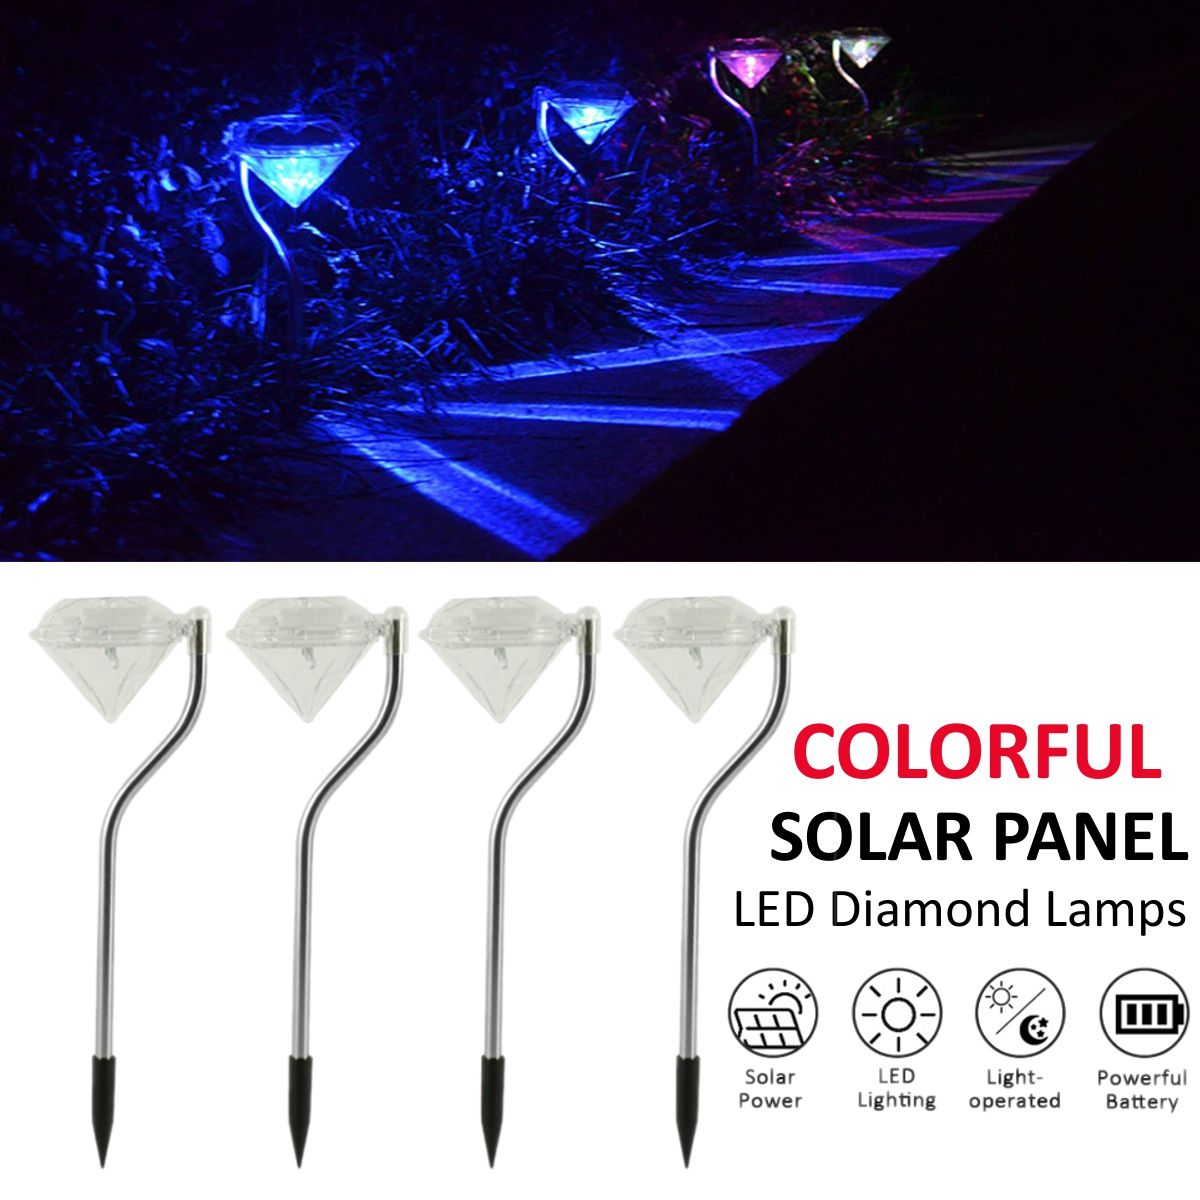 4pcs-Solar-Diamond-Shape-Lawn-Lamp-Outdoor-Garden-LED-Waterproof-Decorative-Lamp-Christmas-Decoratio-1729954